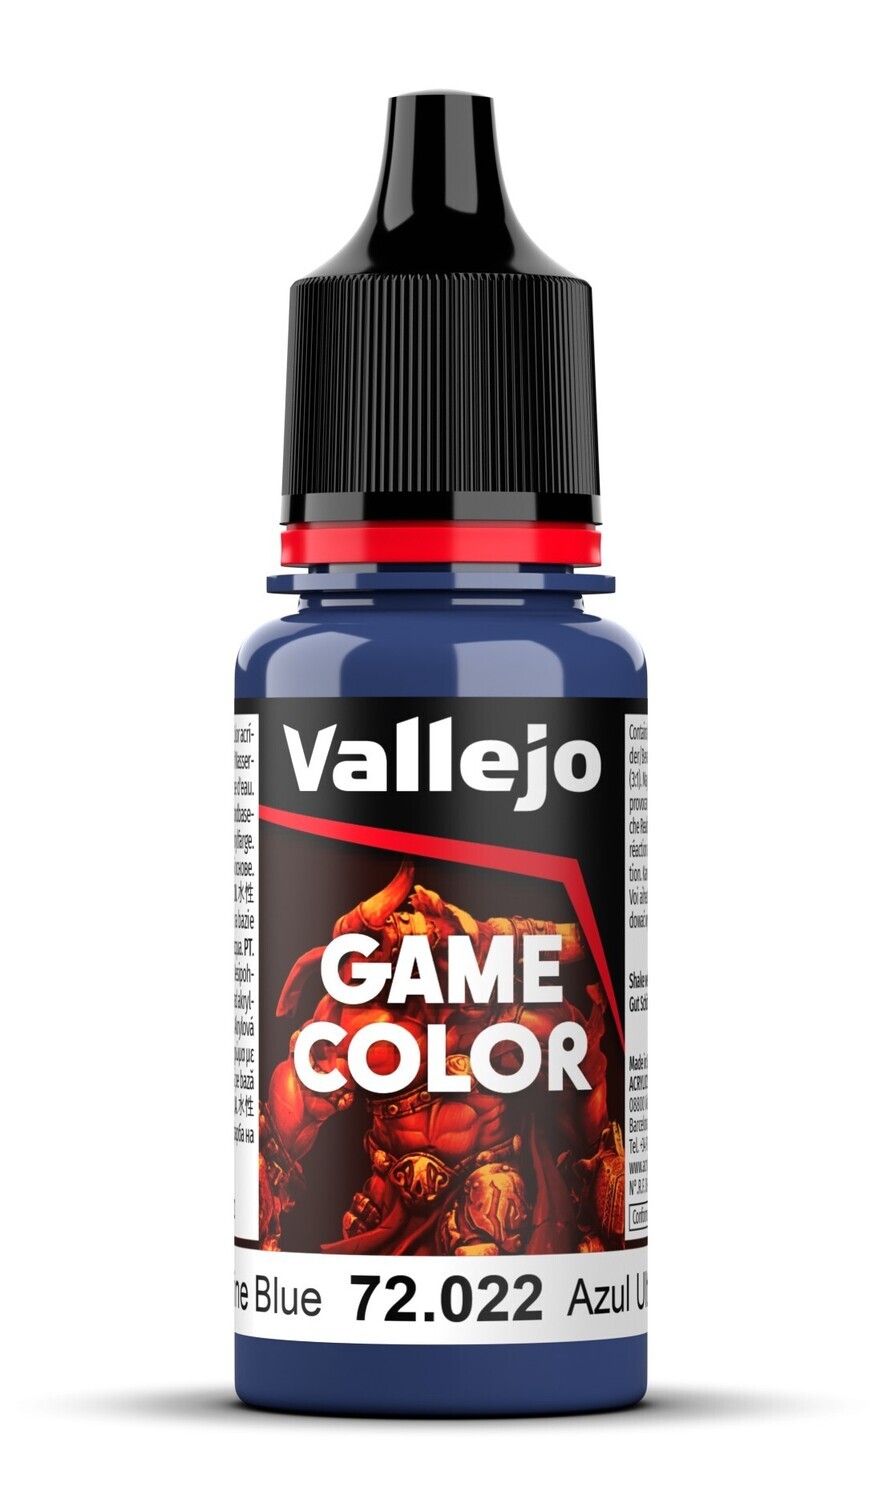 Ultramarine Blue 18 ml - Game Color - Vallejo